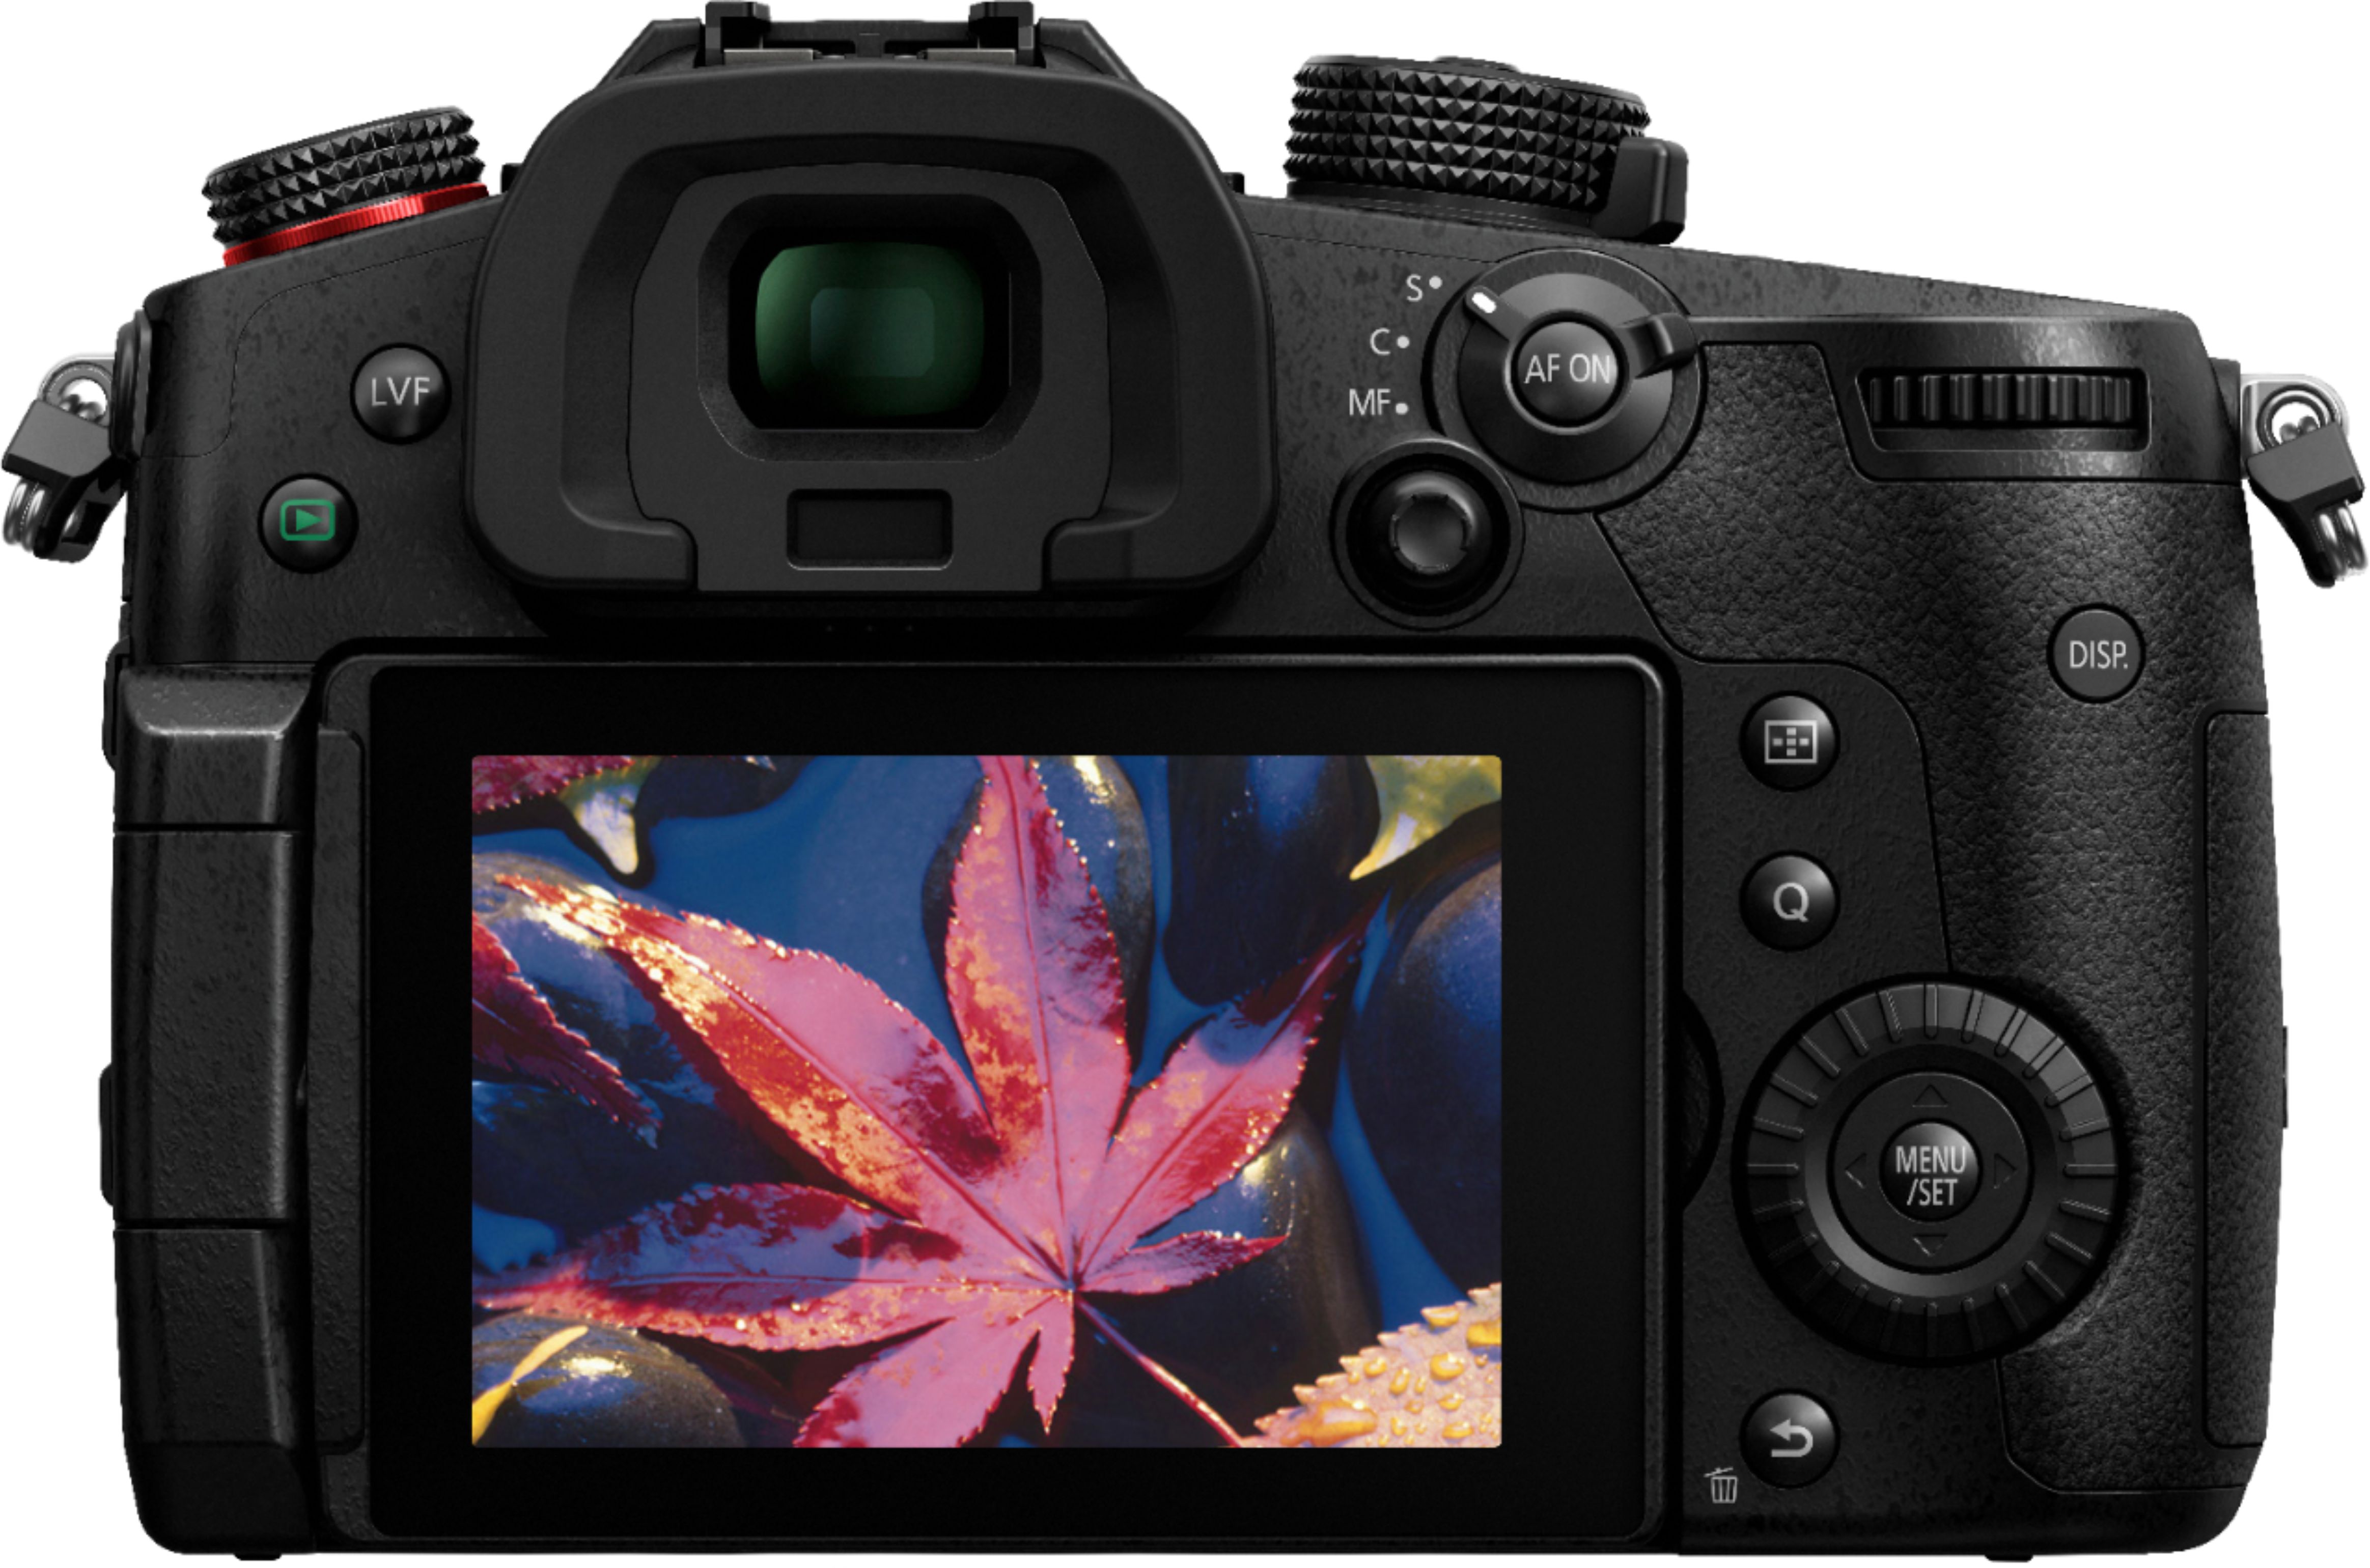 Back View: Panasonic - LUMIX GH5M2 4K Video Mirrorless Camera (Body Only), DC-GH5M2BODY - Black